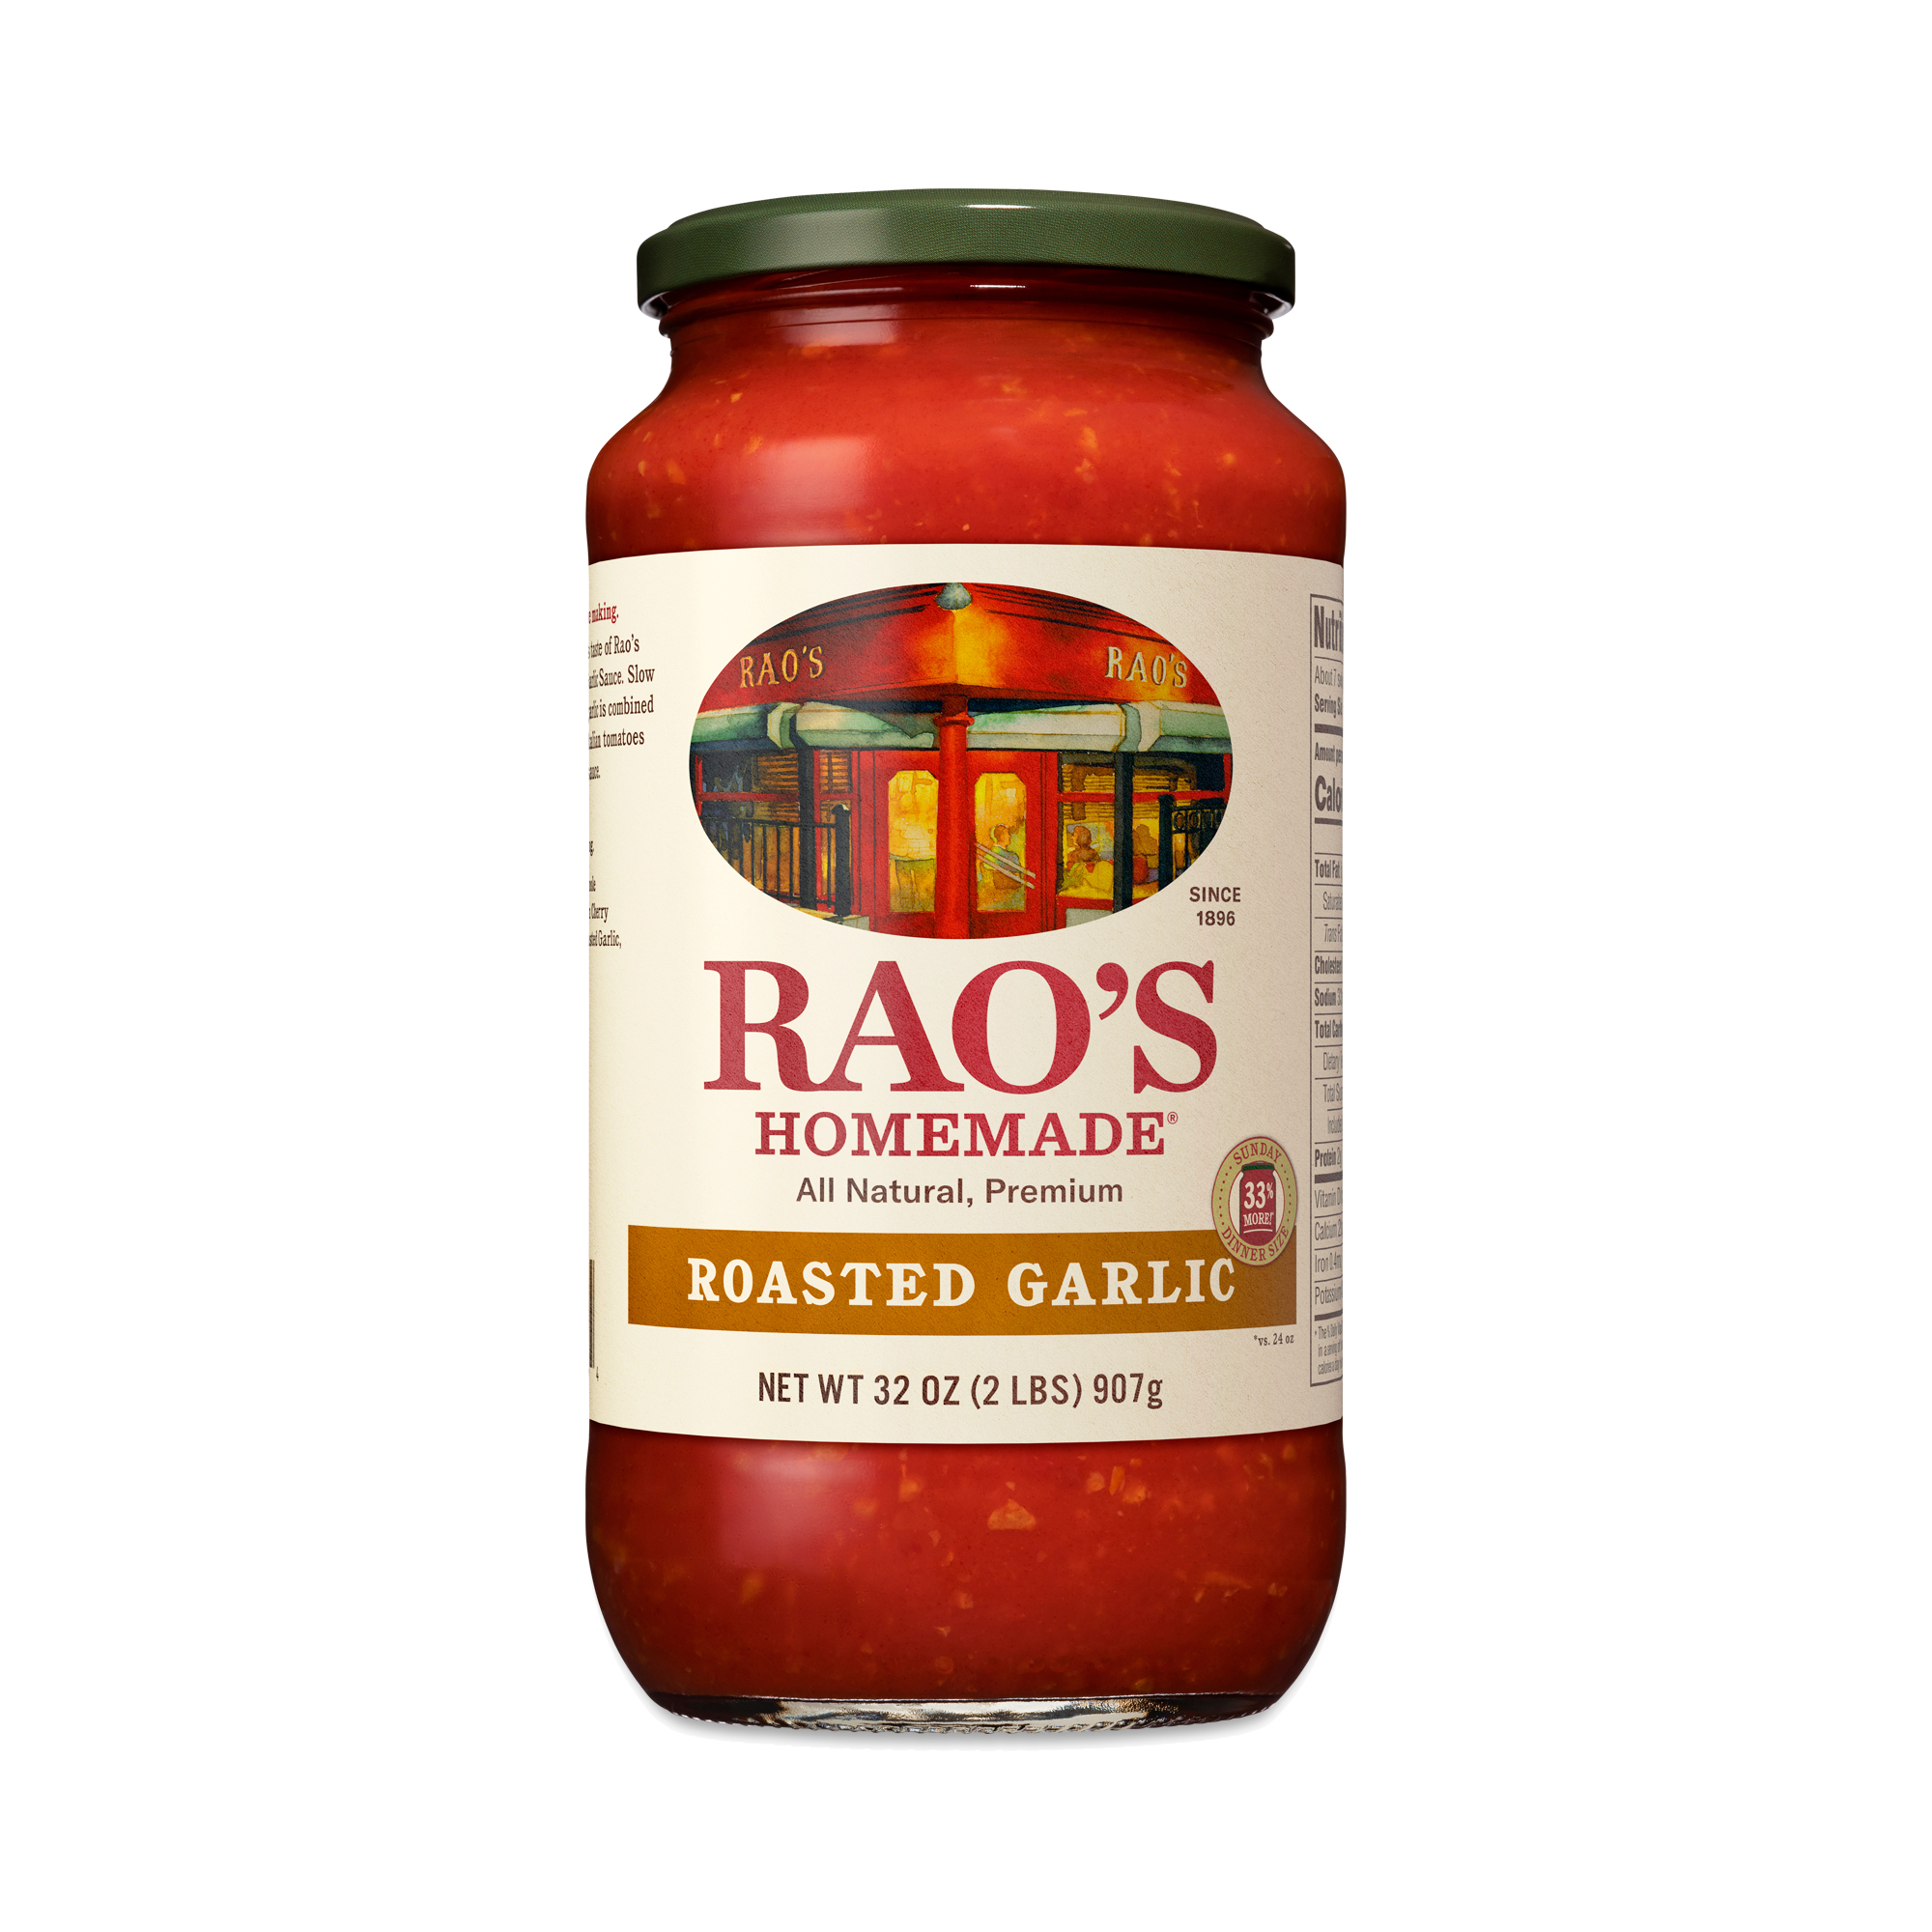 Rao's Homemade Roasted Garlic Sauce 32 oz jar